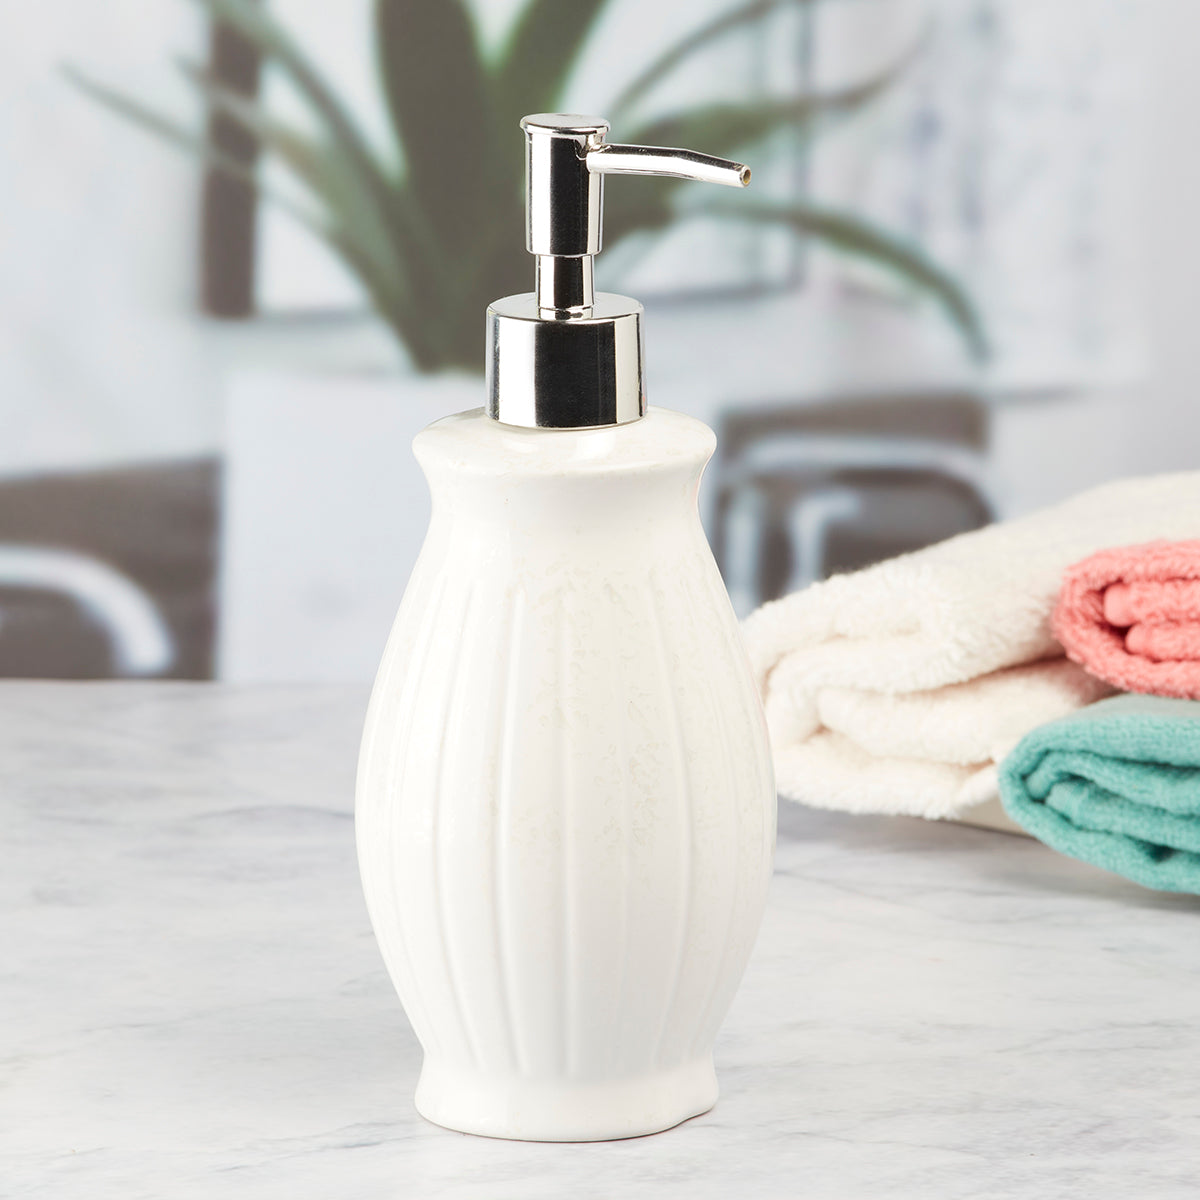 Ceramic Soap Dispenser handwash Pump for Bathroom, Set of 1, White (8004)